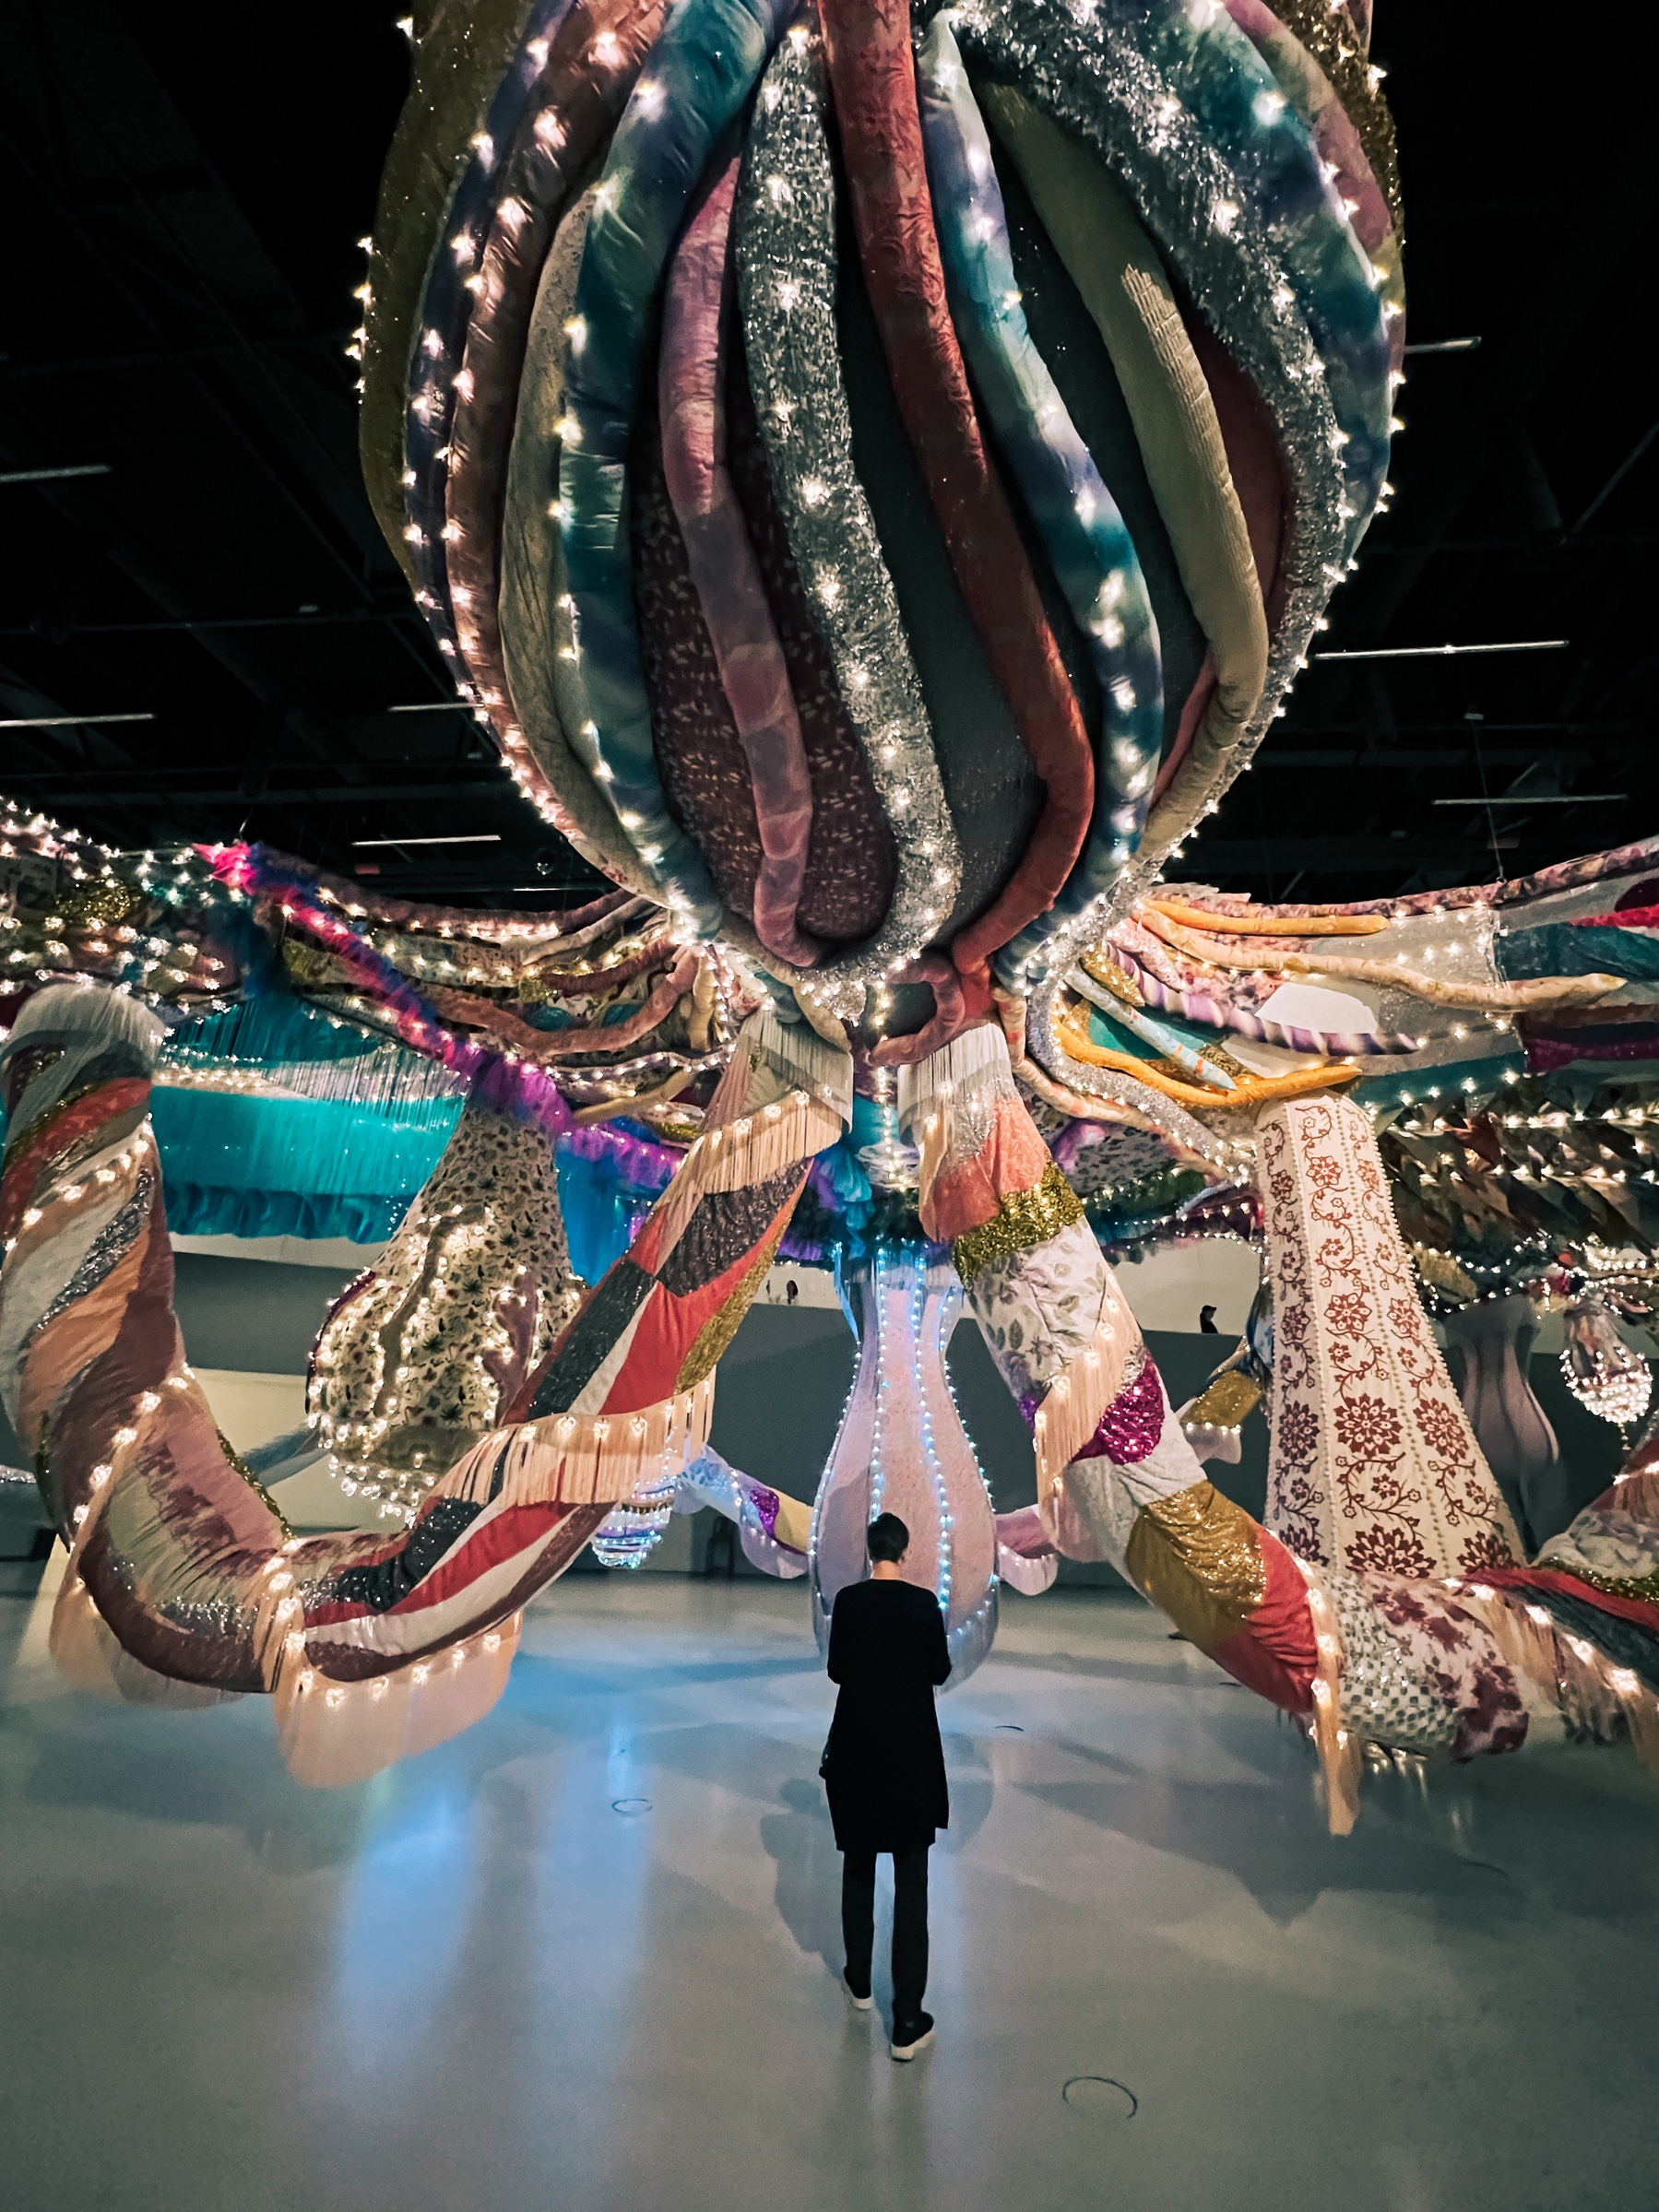 Art work by Joana Vasconcelos. A giant fabric octopus. 